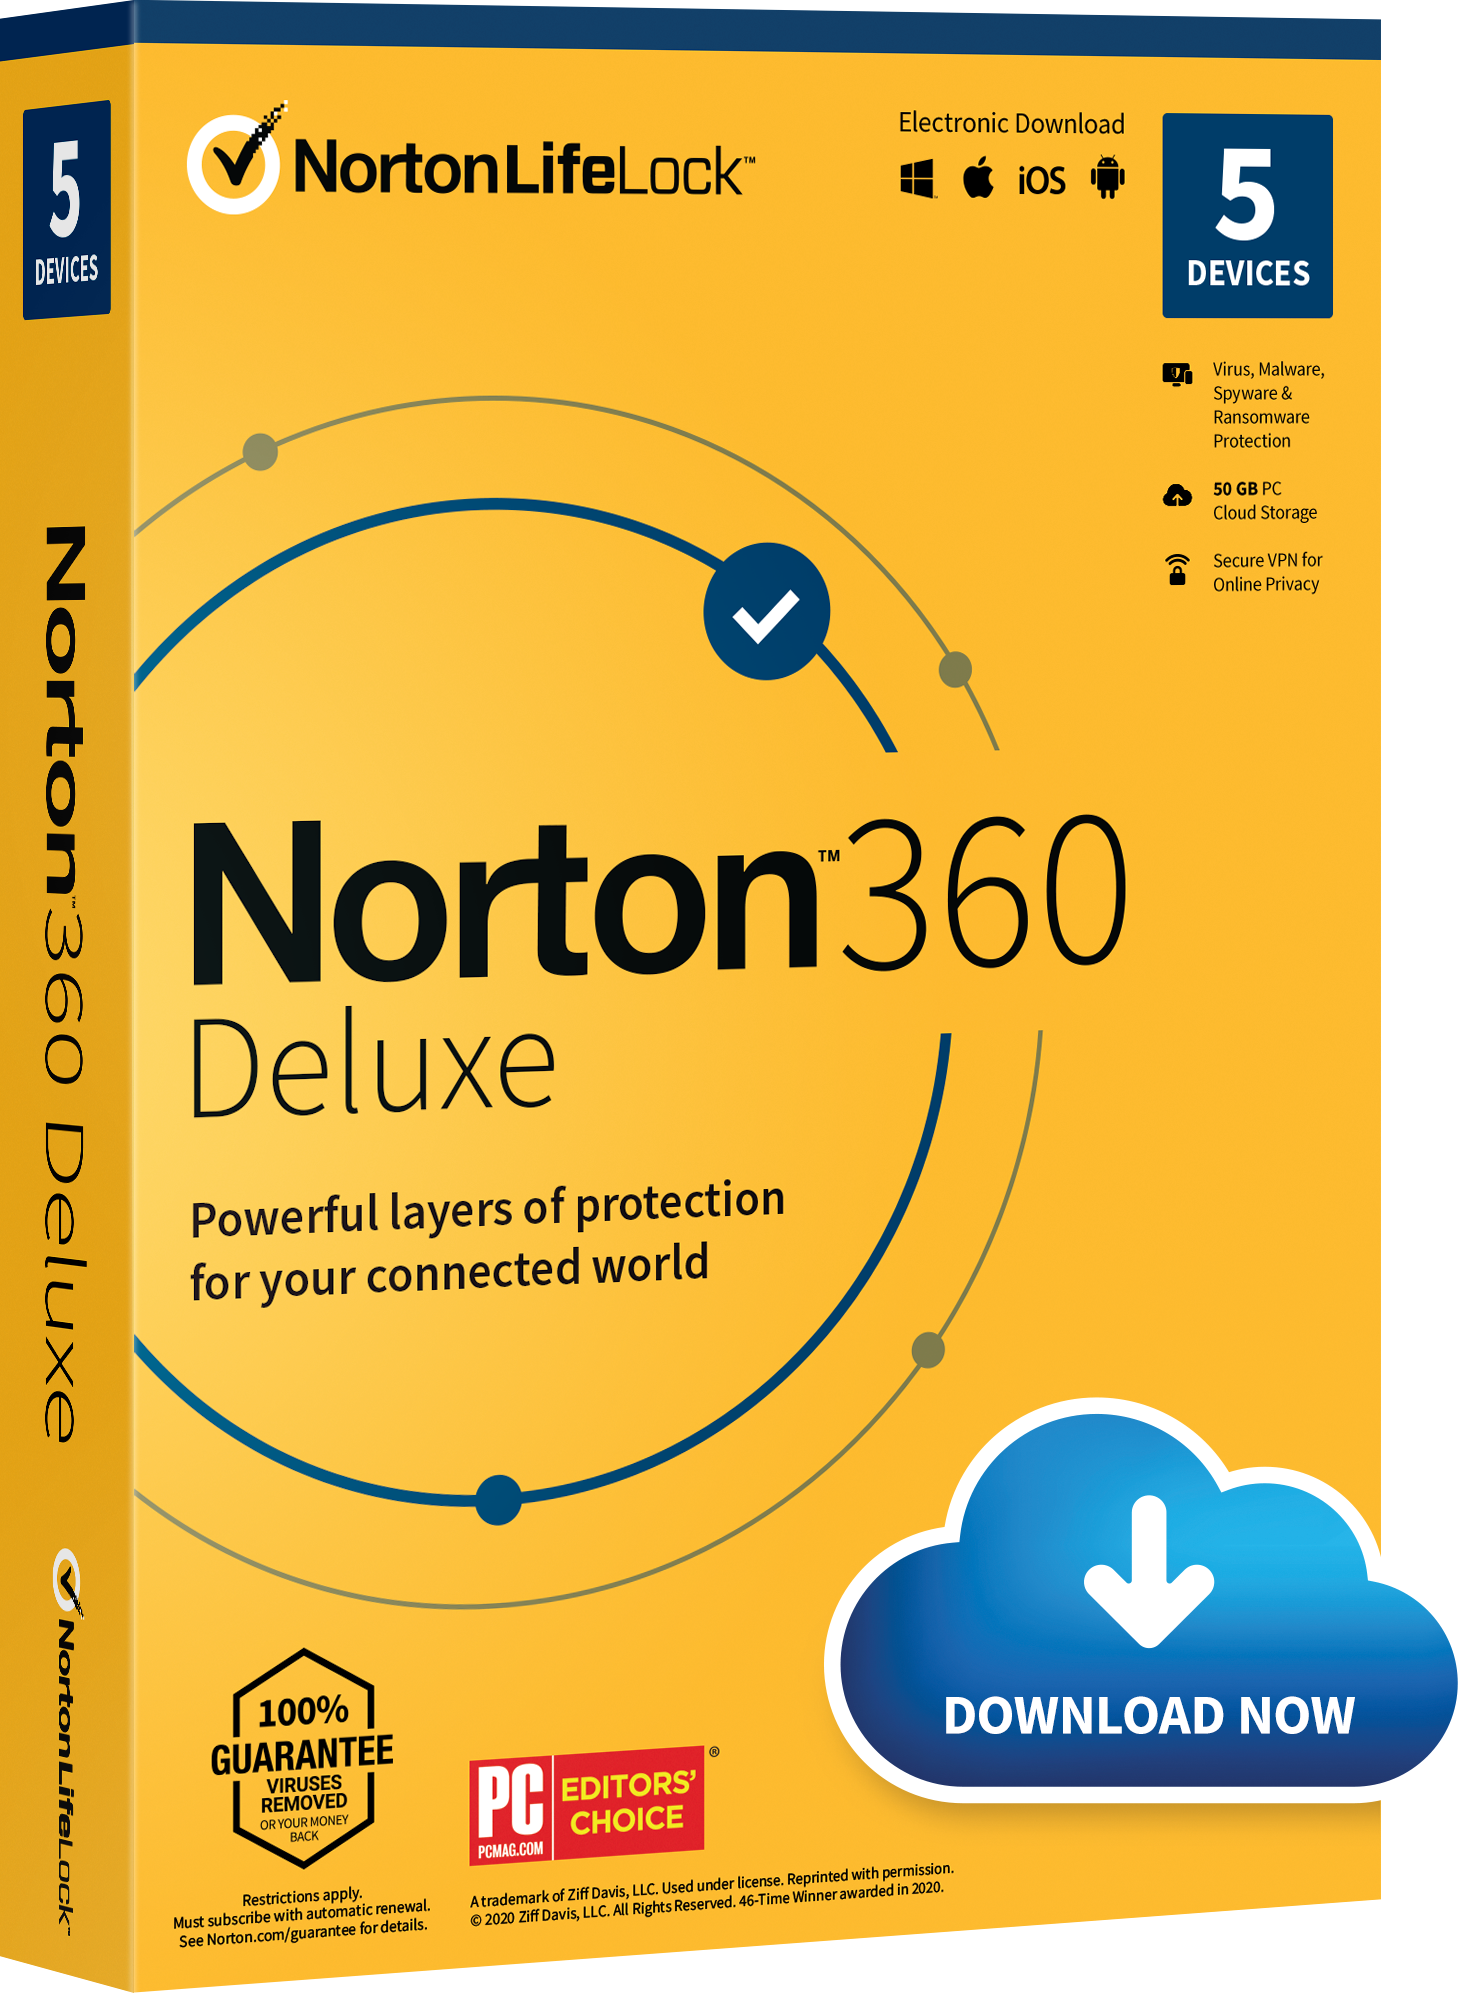 norton free vpn windows 7 download